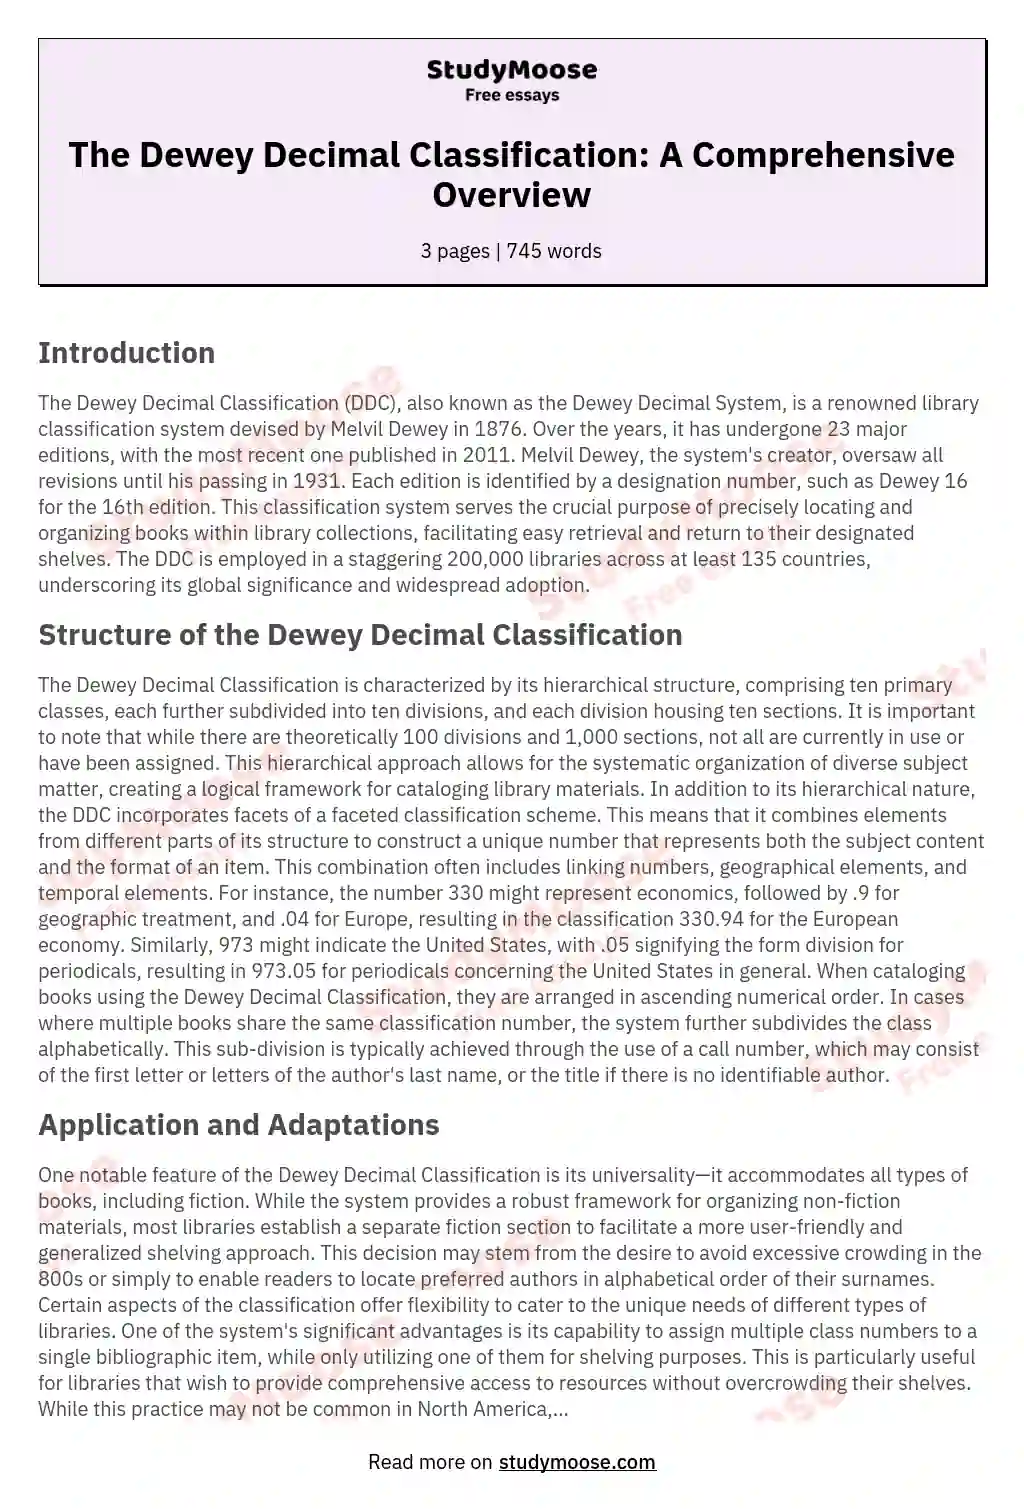 The Dewey Decimal Classification: A Comprehensive Overview essay